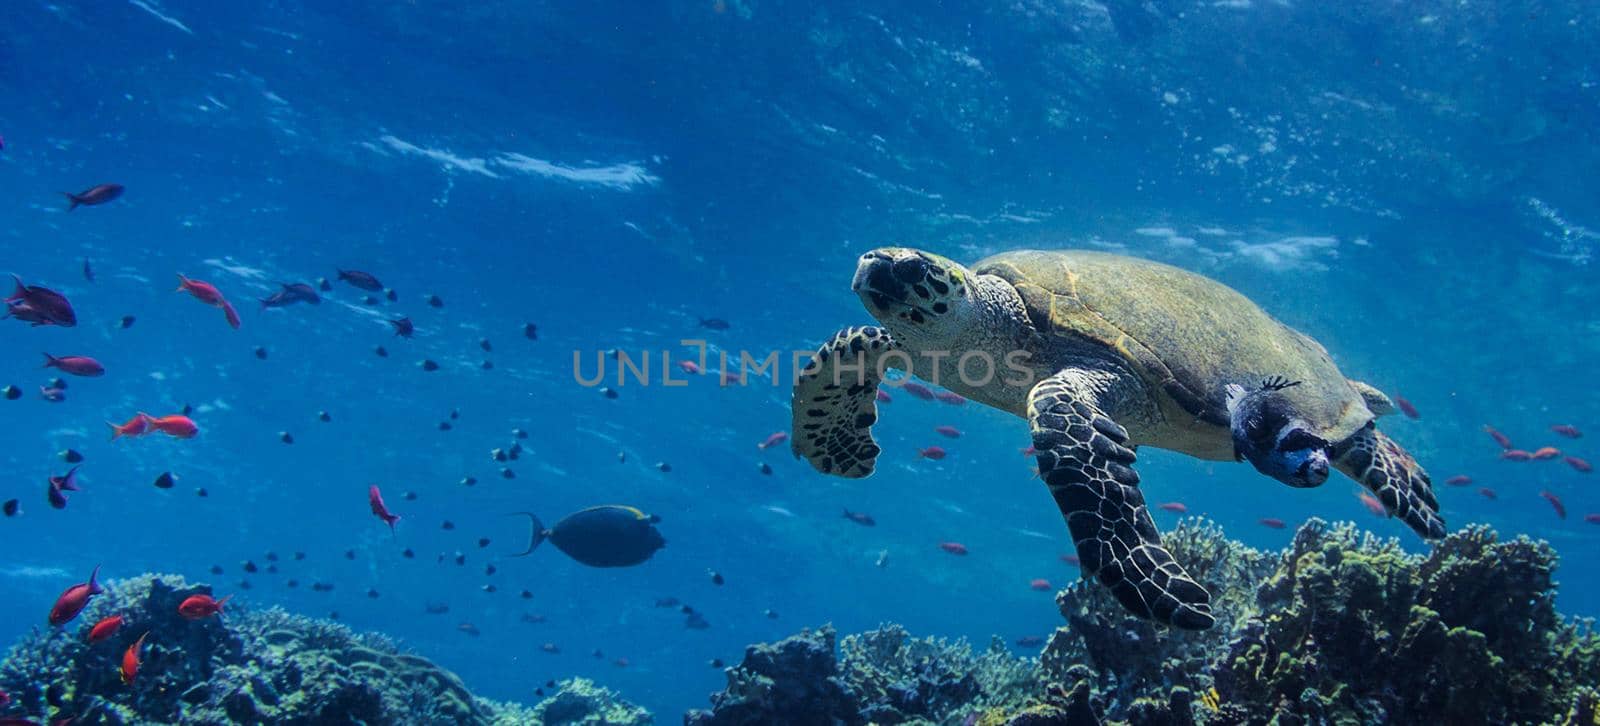 Underwater ocean pictures by TravelSync27